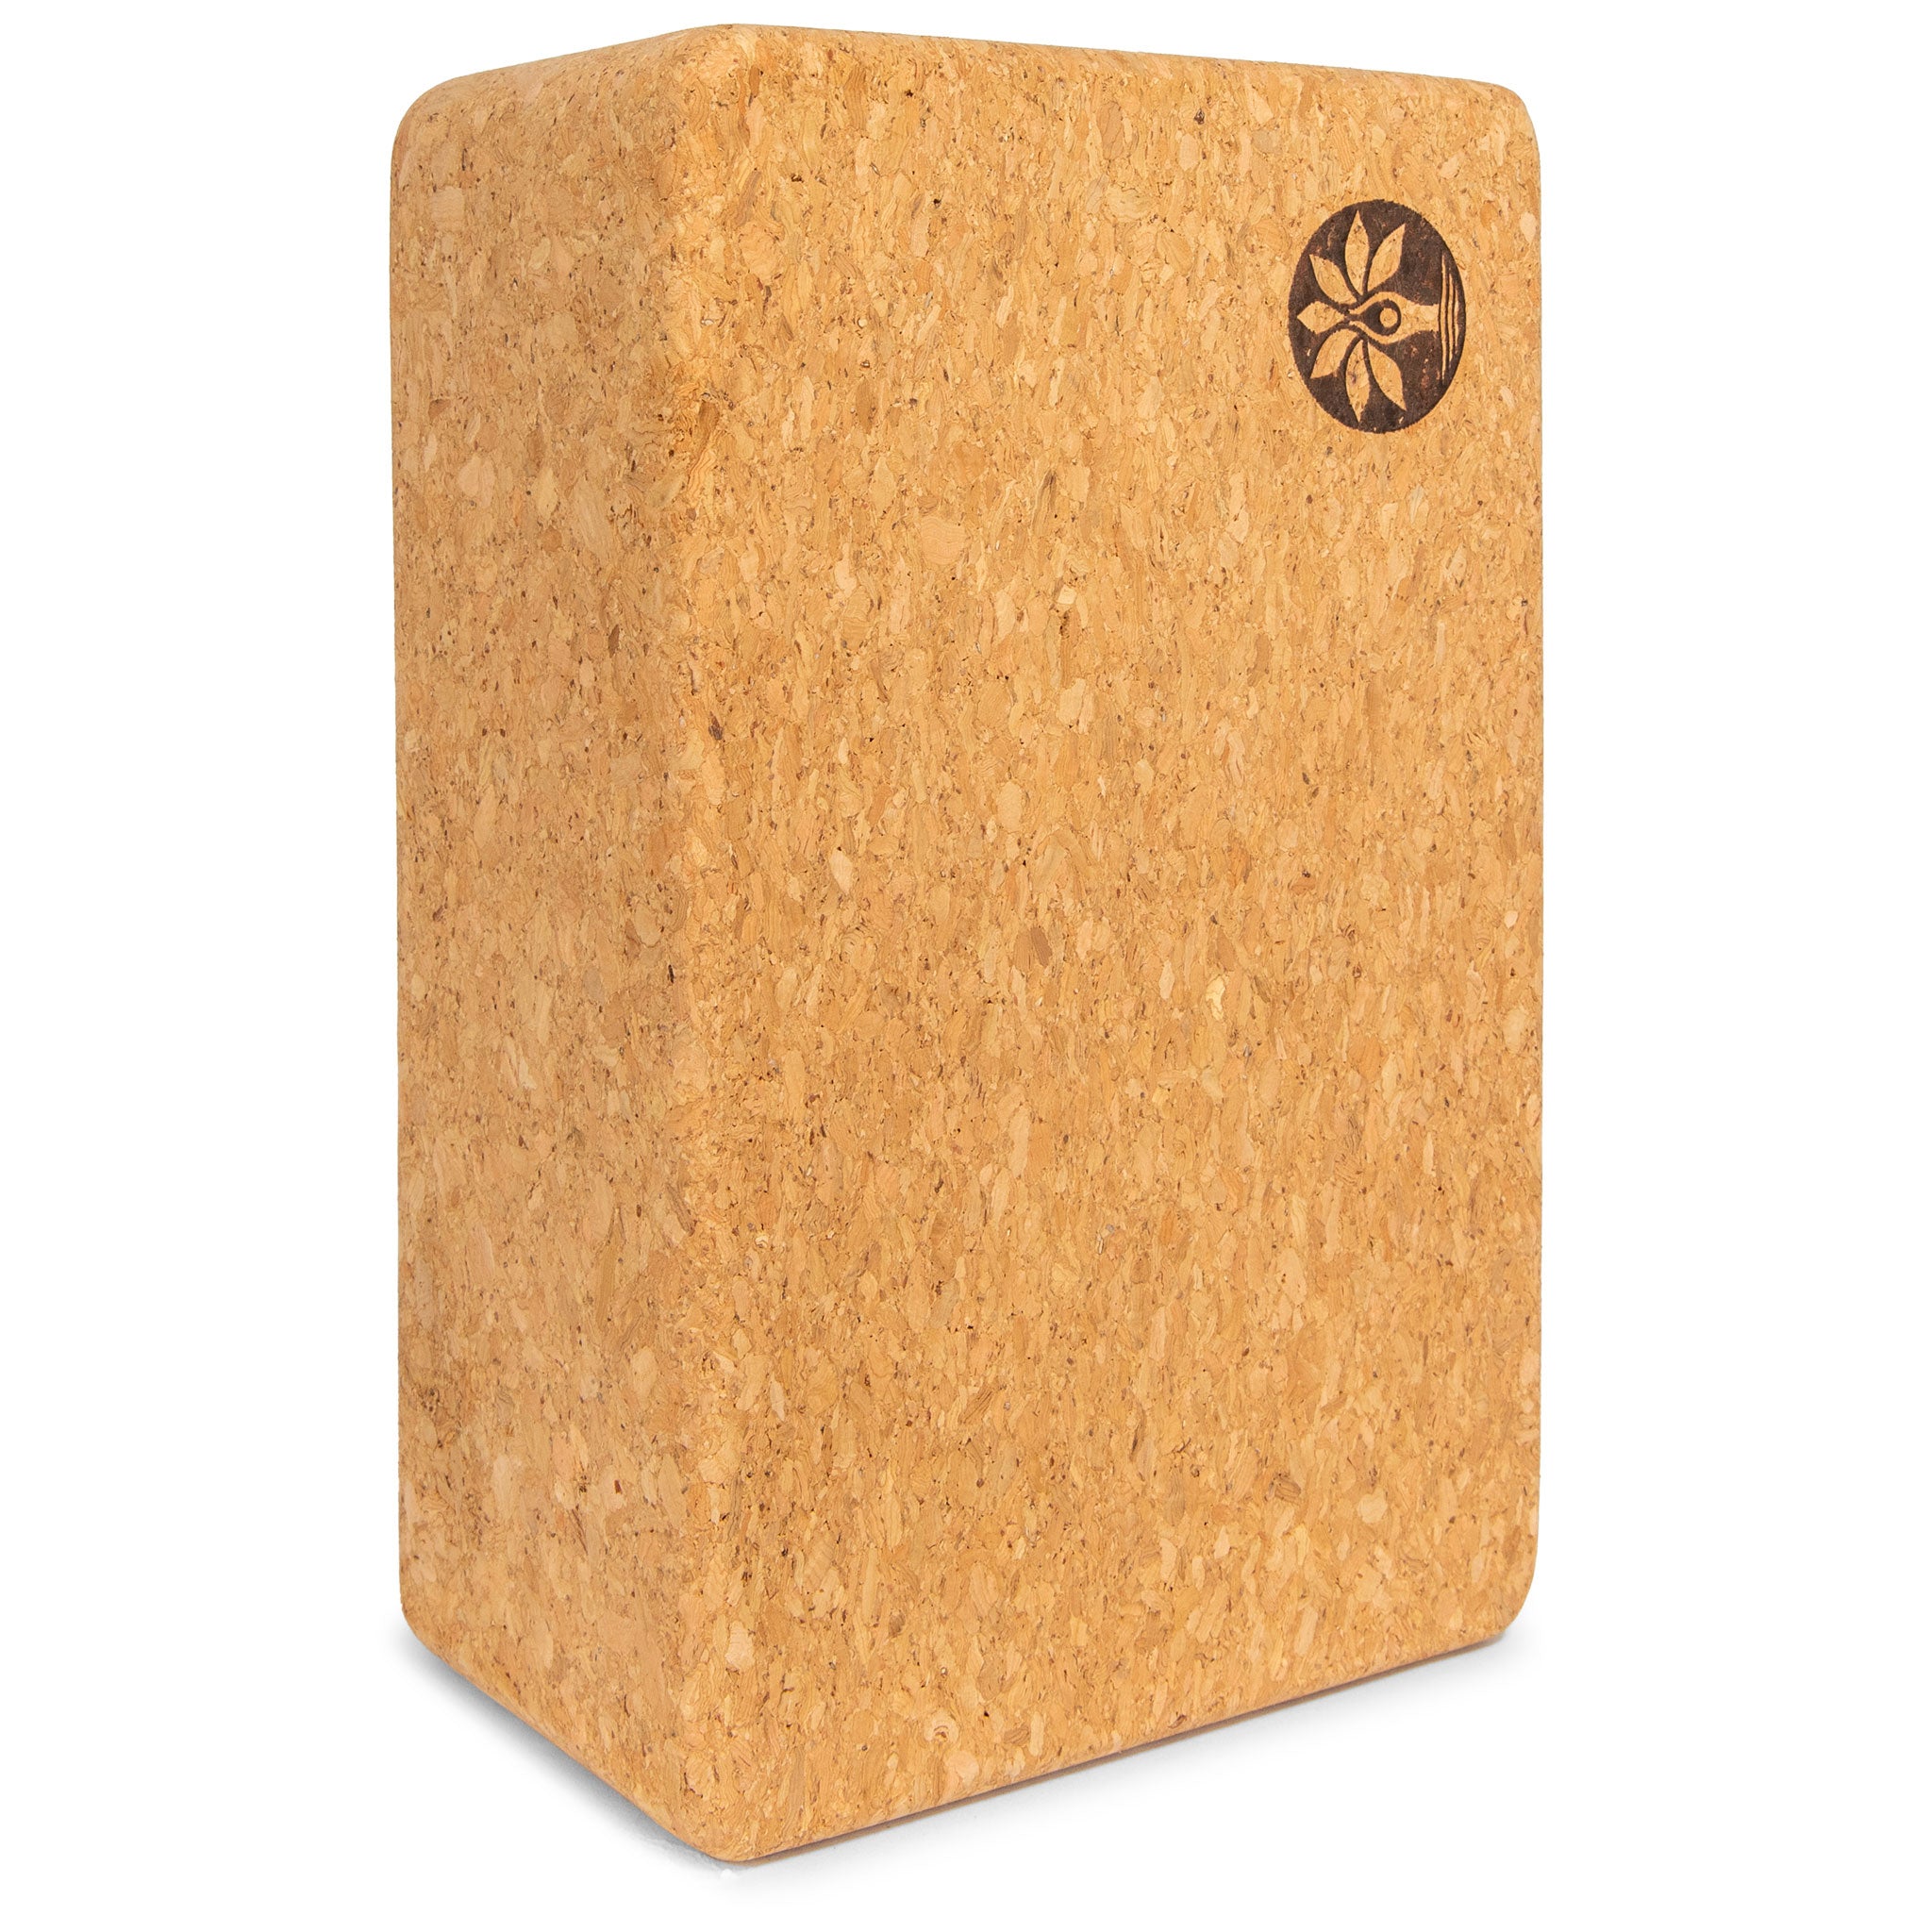 Eco Yoga Cork Blocks - Pair - 4 in x 6 in x 9 in - Large Size, Blocks -   Canada